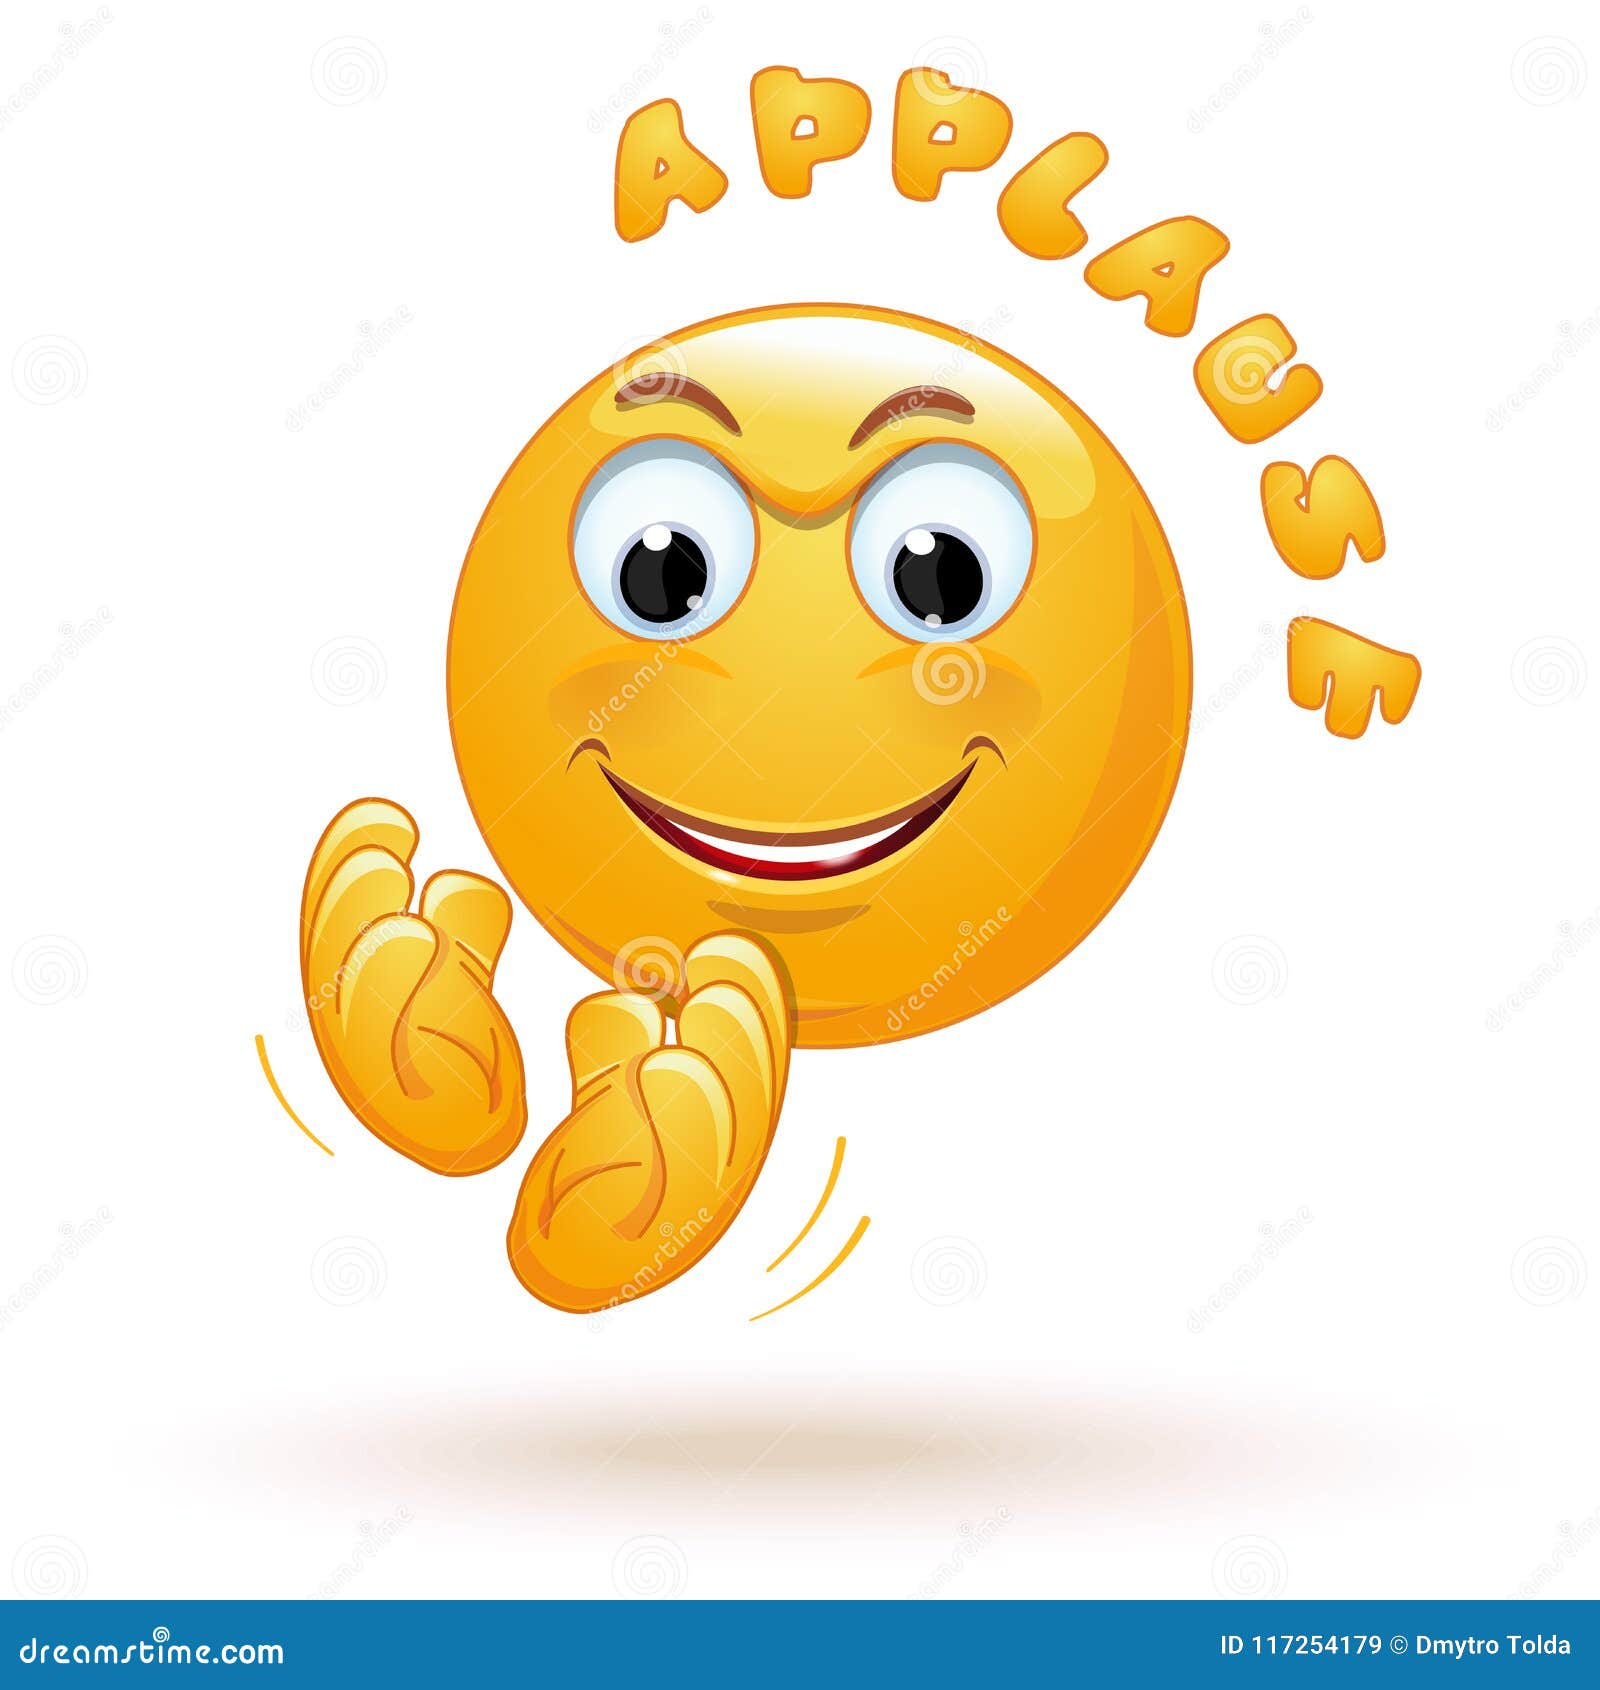 Joyful Emoticon Applauds Joyful Emoji Claps Stock Vector Illustration Of Face Applauds